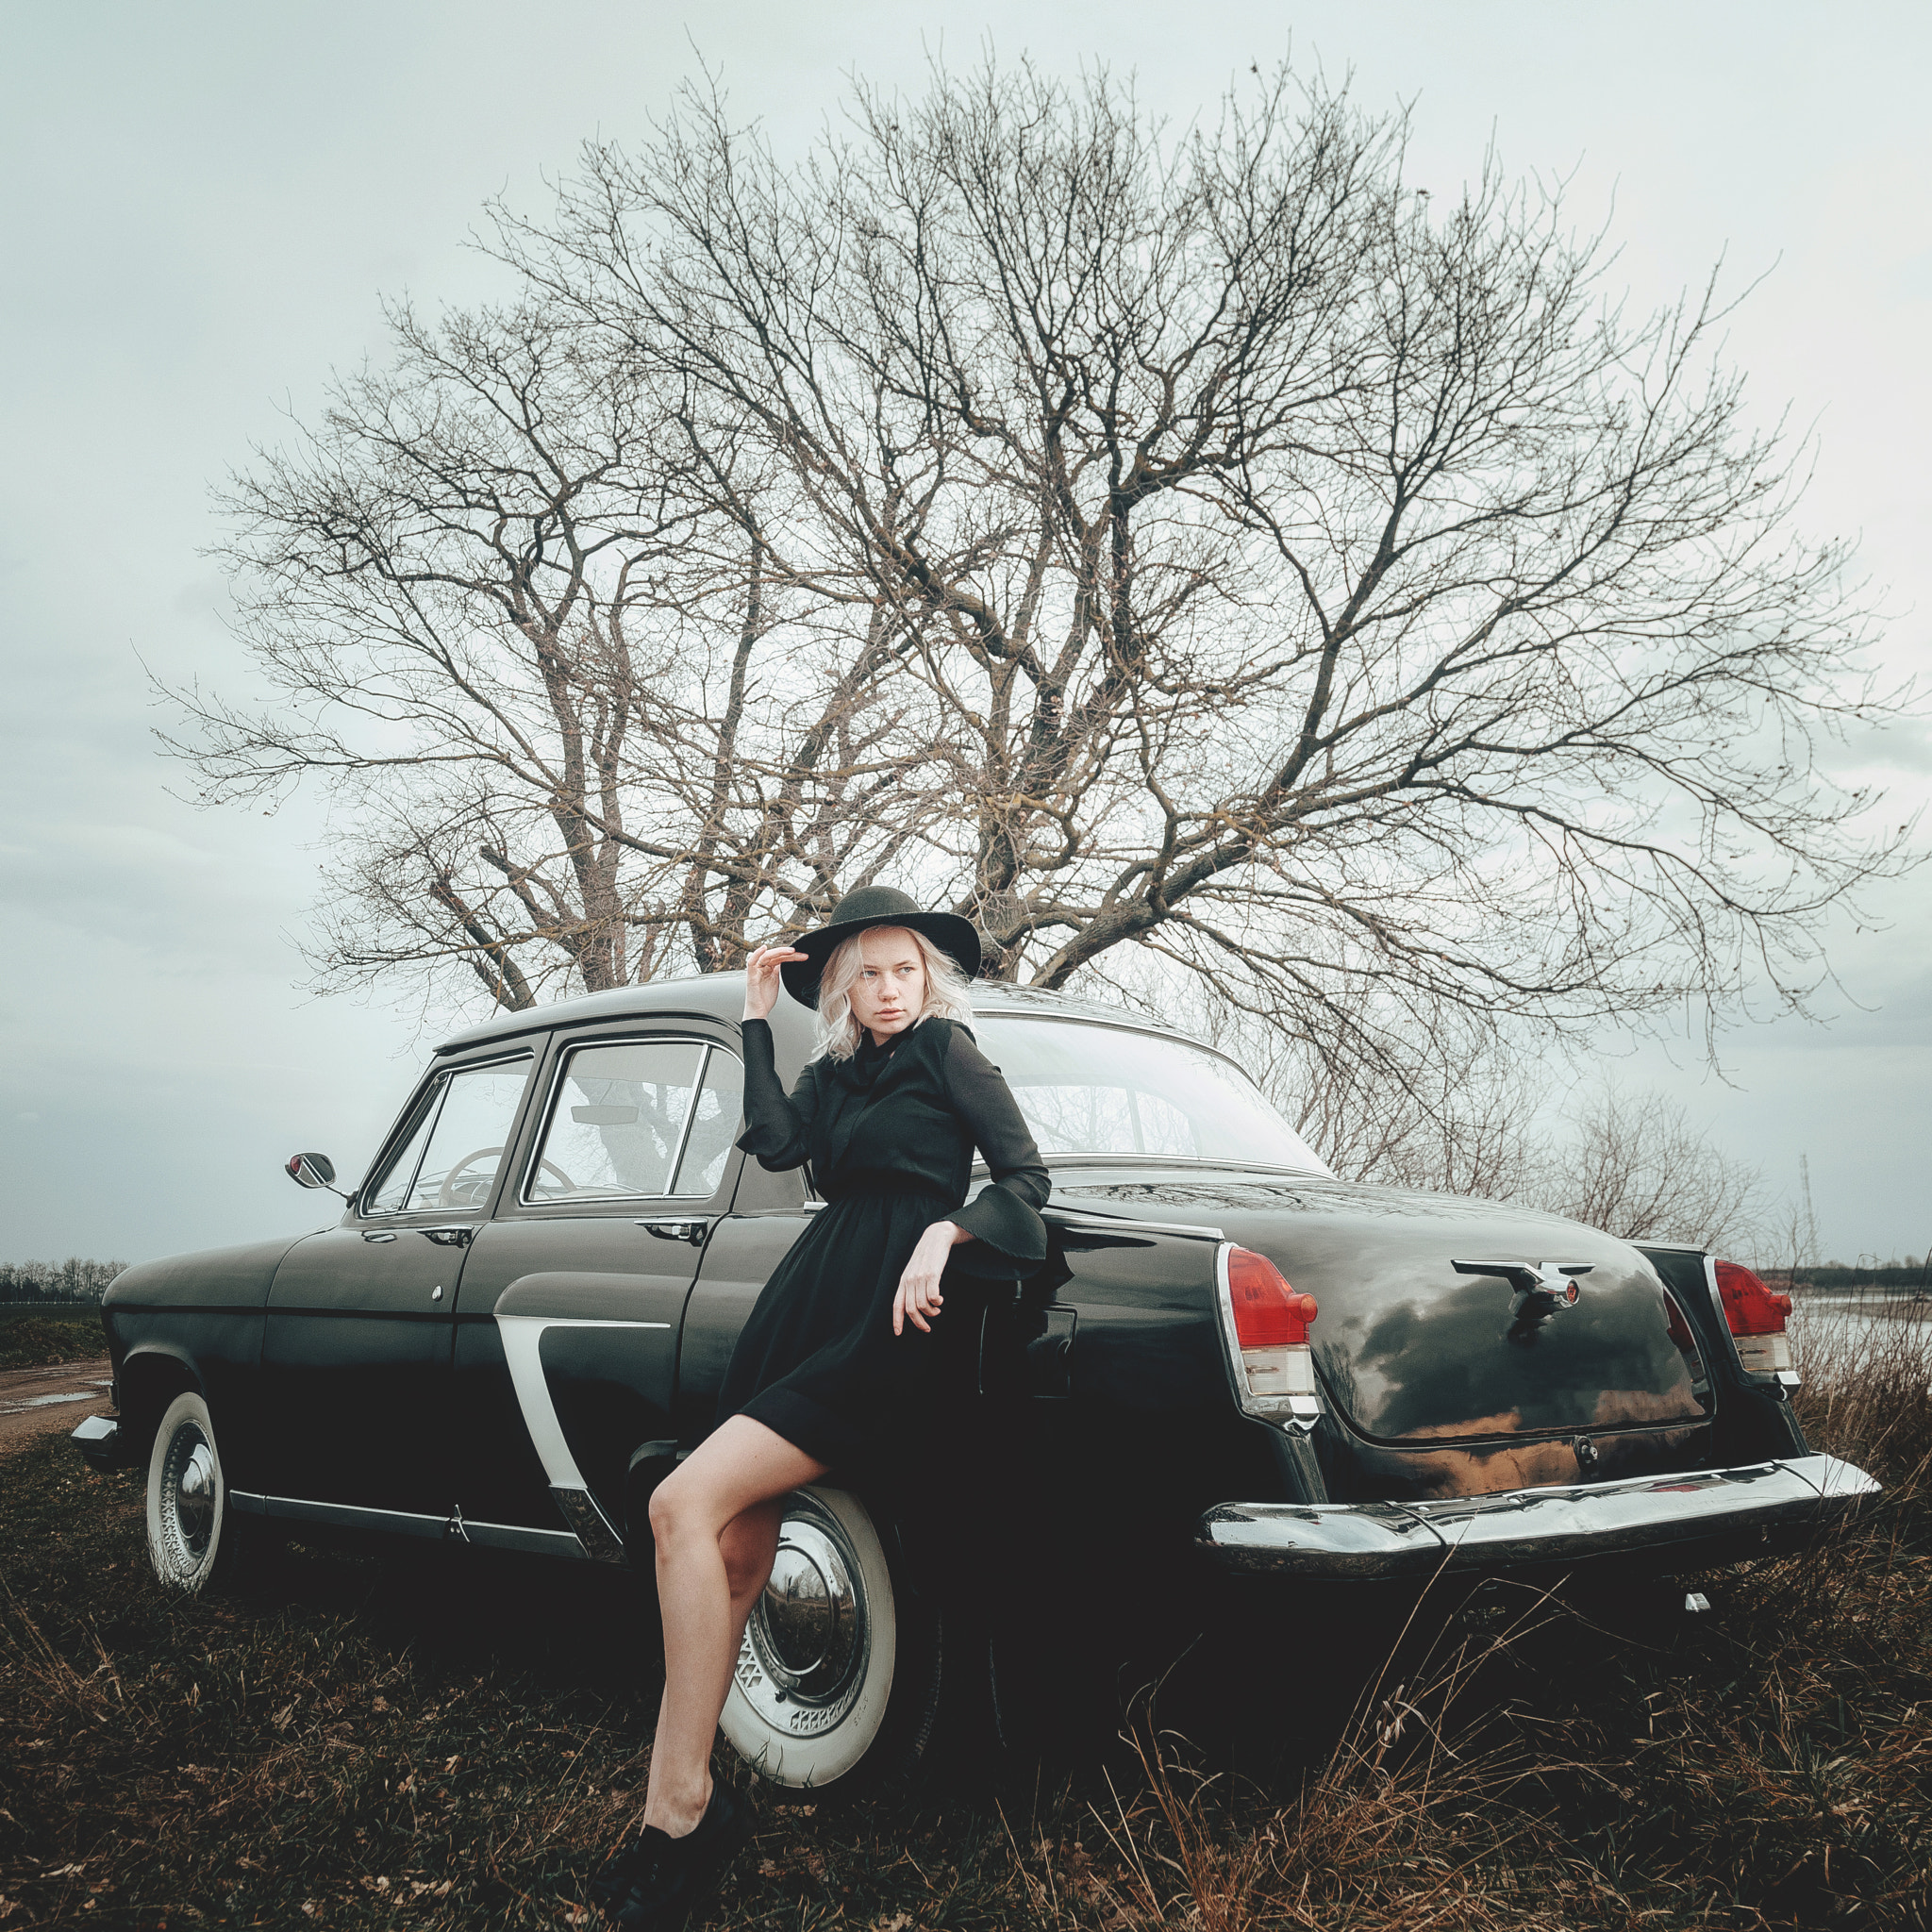 Andrew Vasiliev Women Hat Blonde Black Clothing Car Mist Trees Sky Old Car GAZ GAZ 21 2048x2048